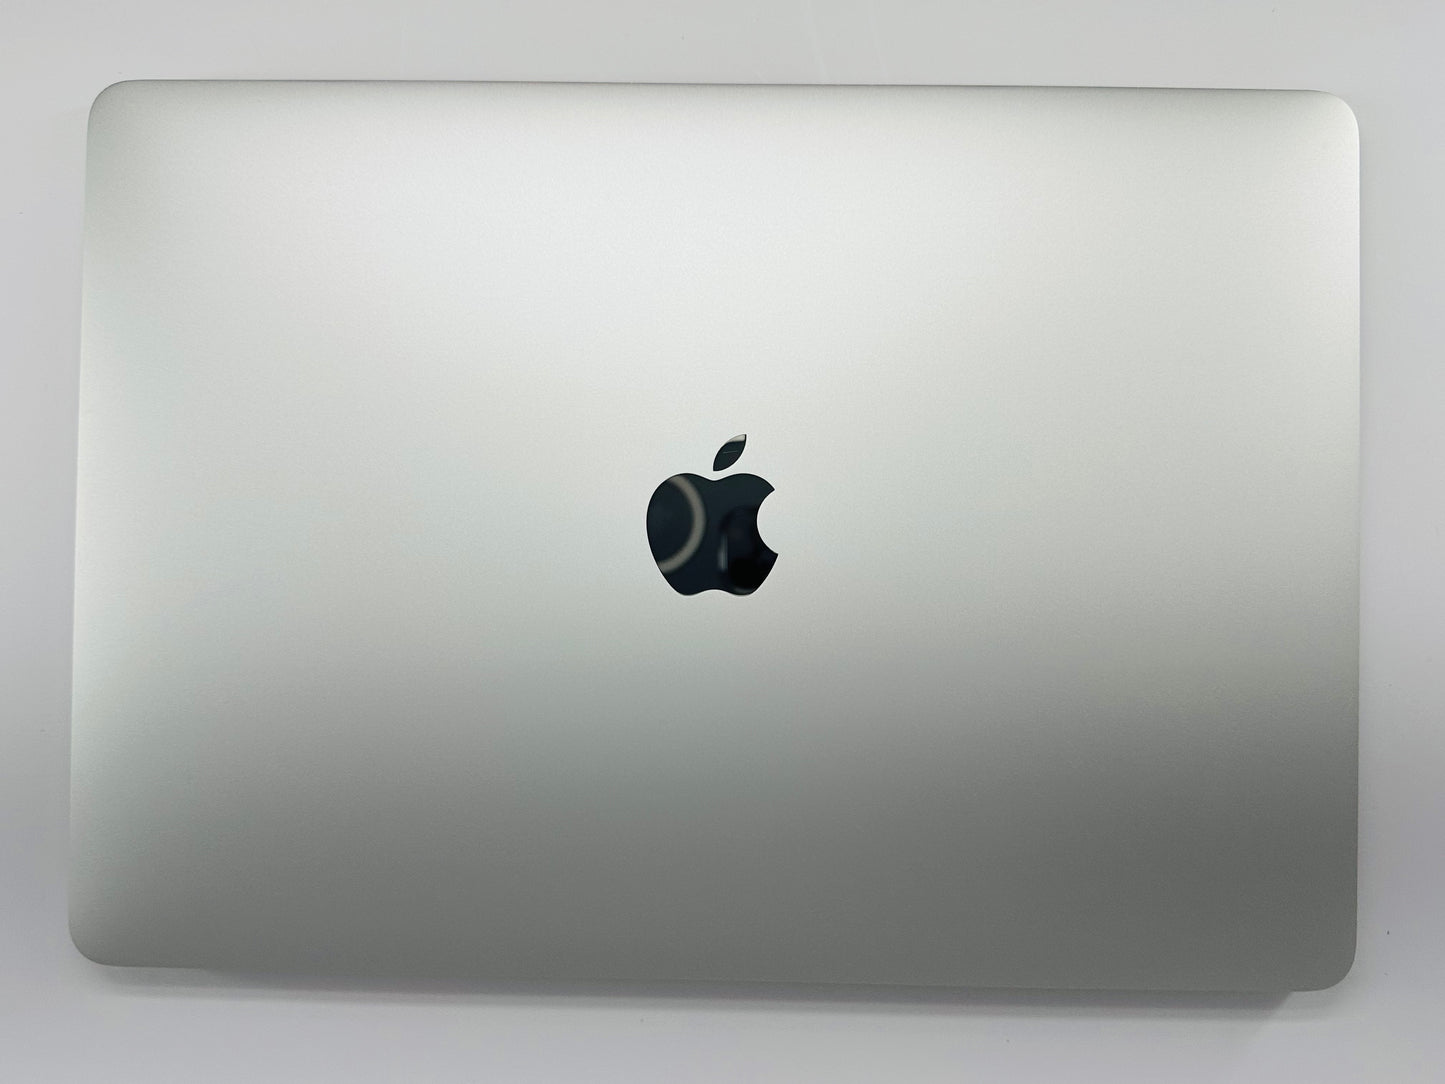 Apple 2019 MacBook Air 1.6GHz Dual-Core i5 8GB RAM 256GB SSD IUG617 - Excellent